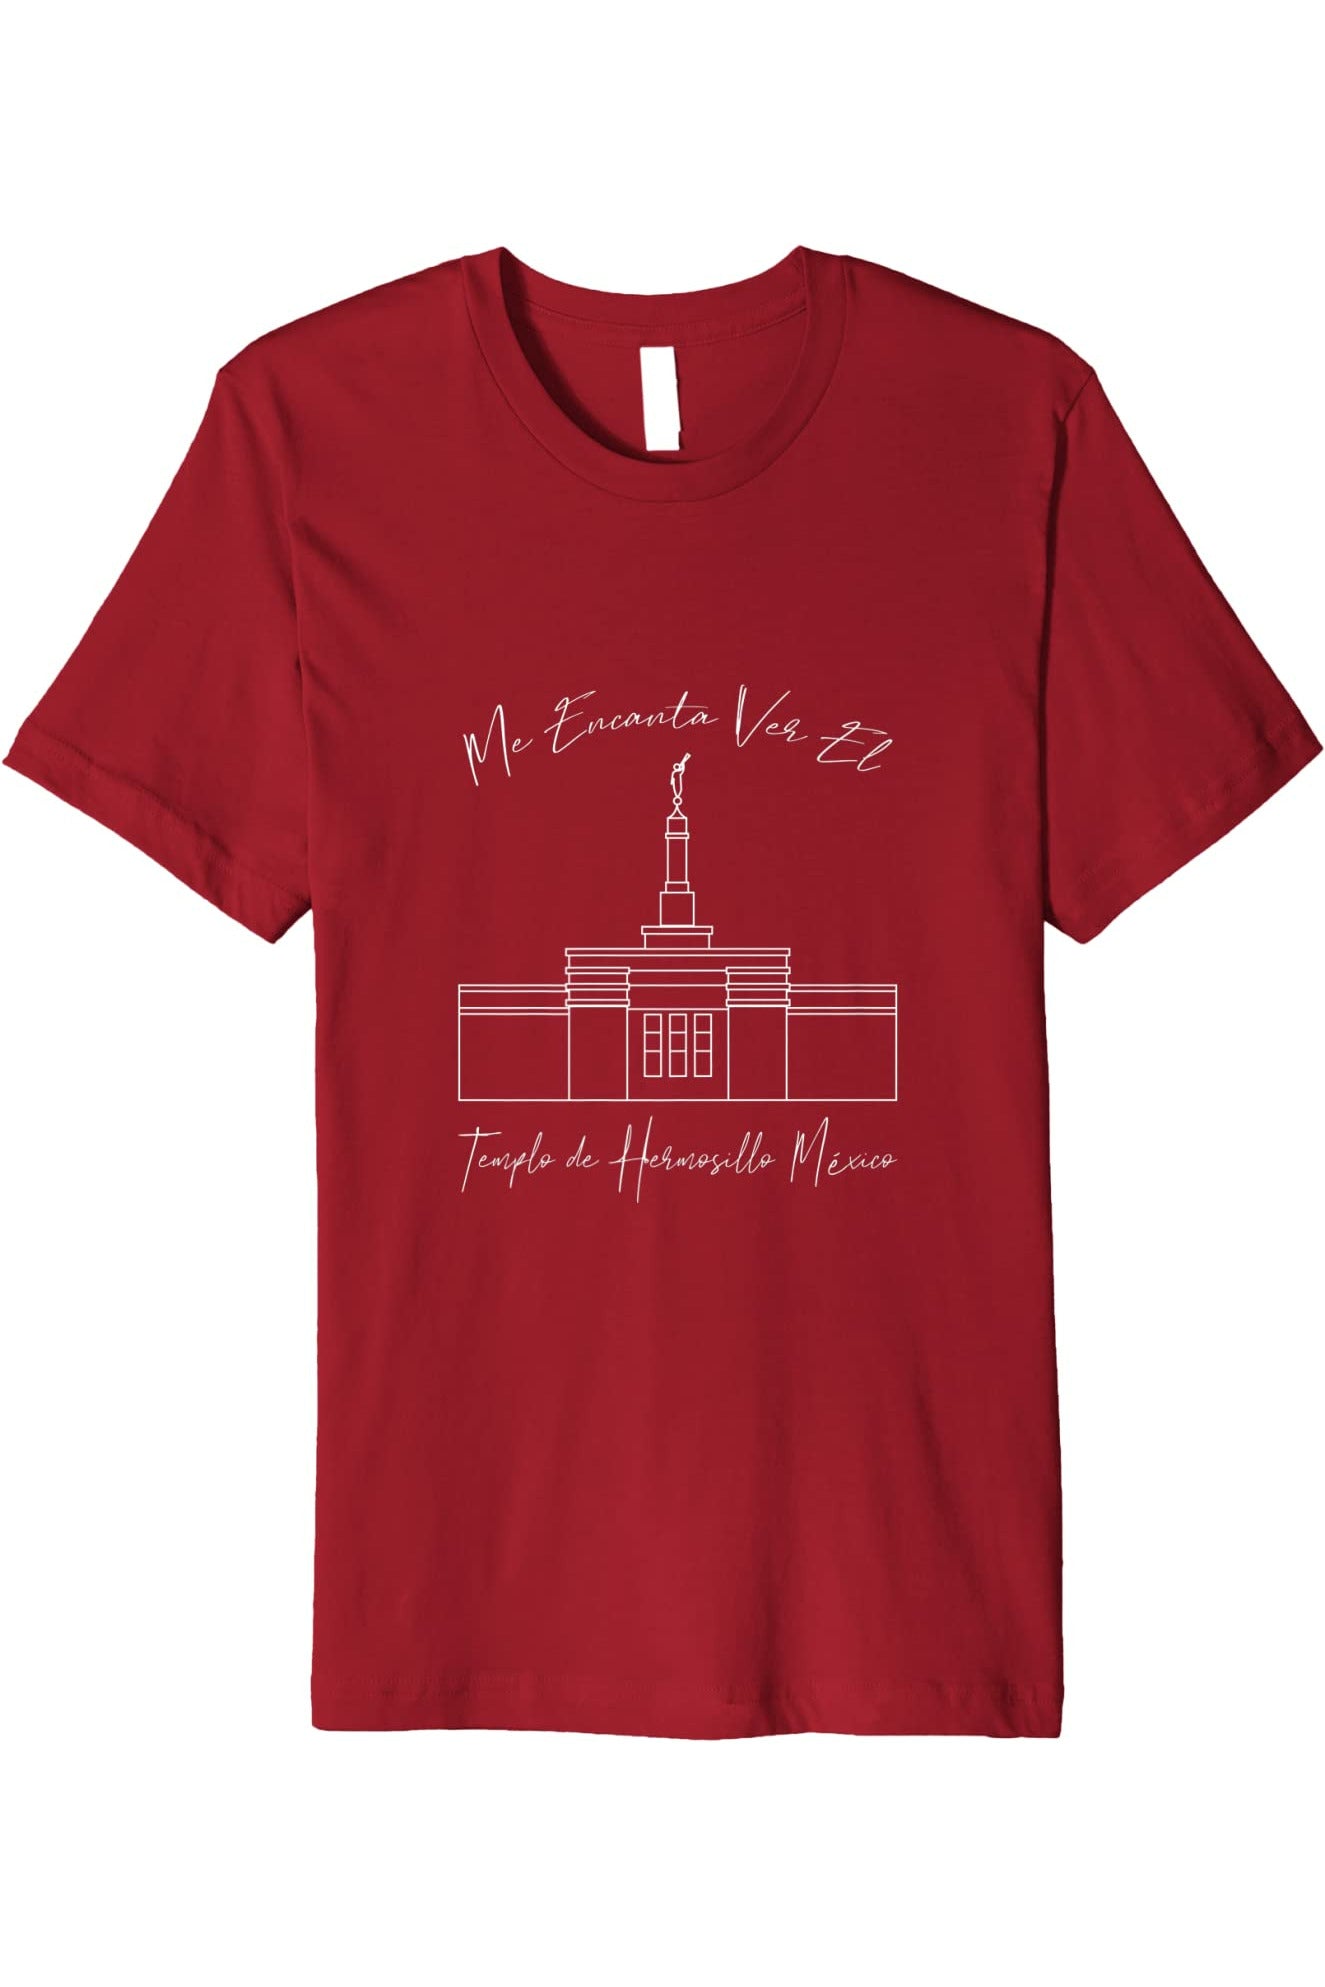 Hermosillo Mexico Temple T-Shirt - Premium - Calligraphy Style (Spanish) US